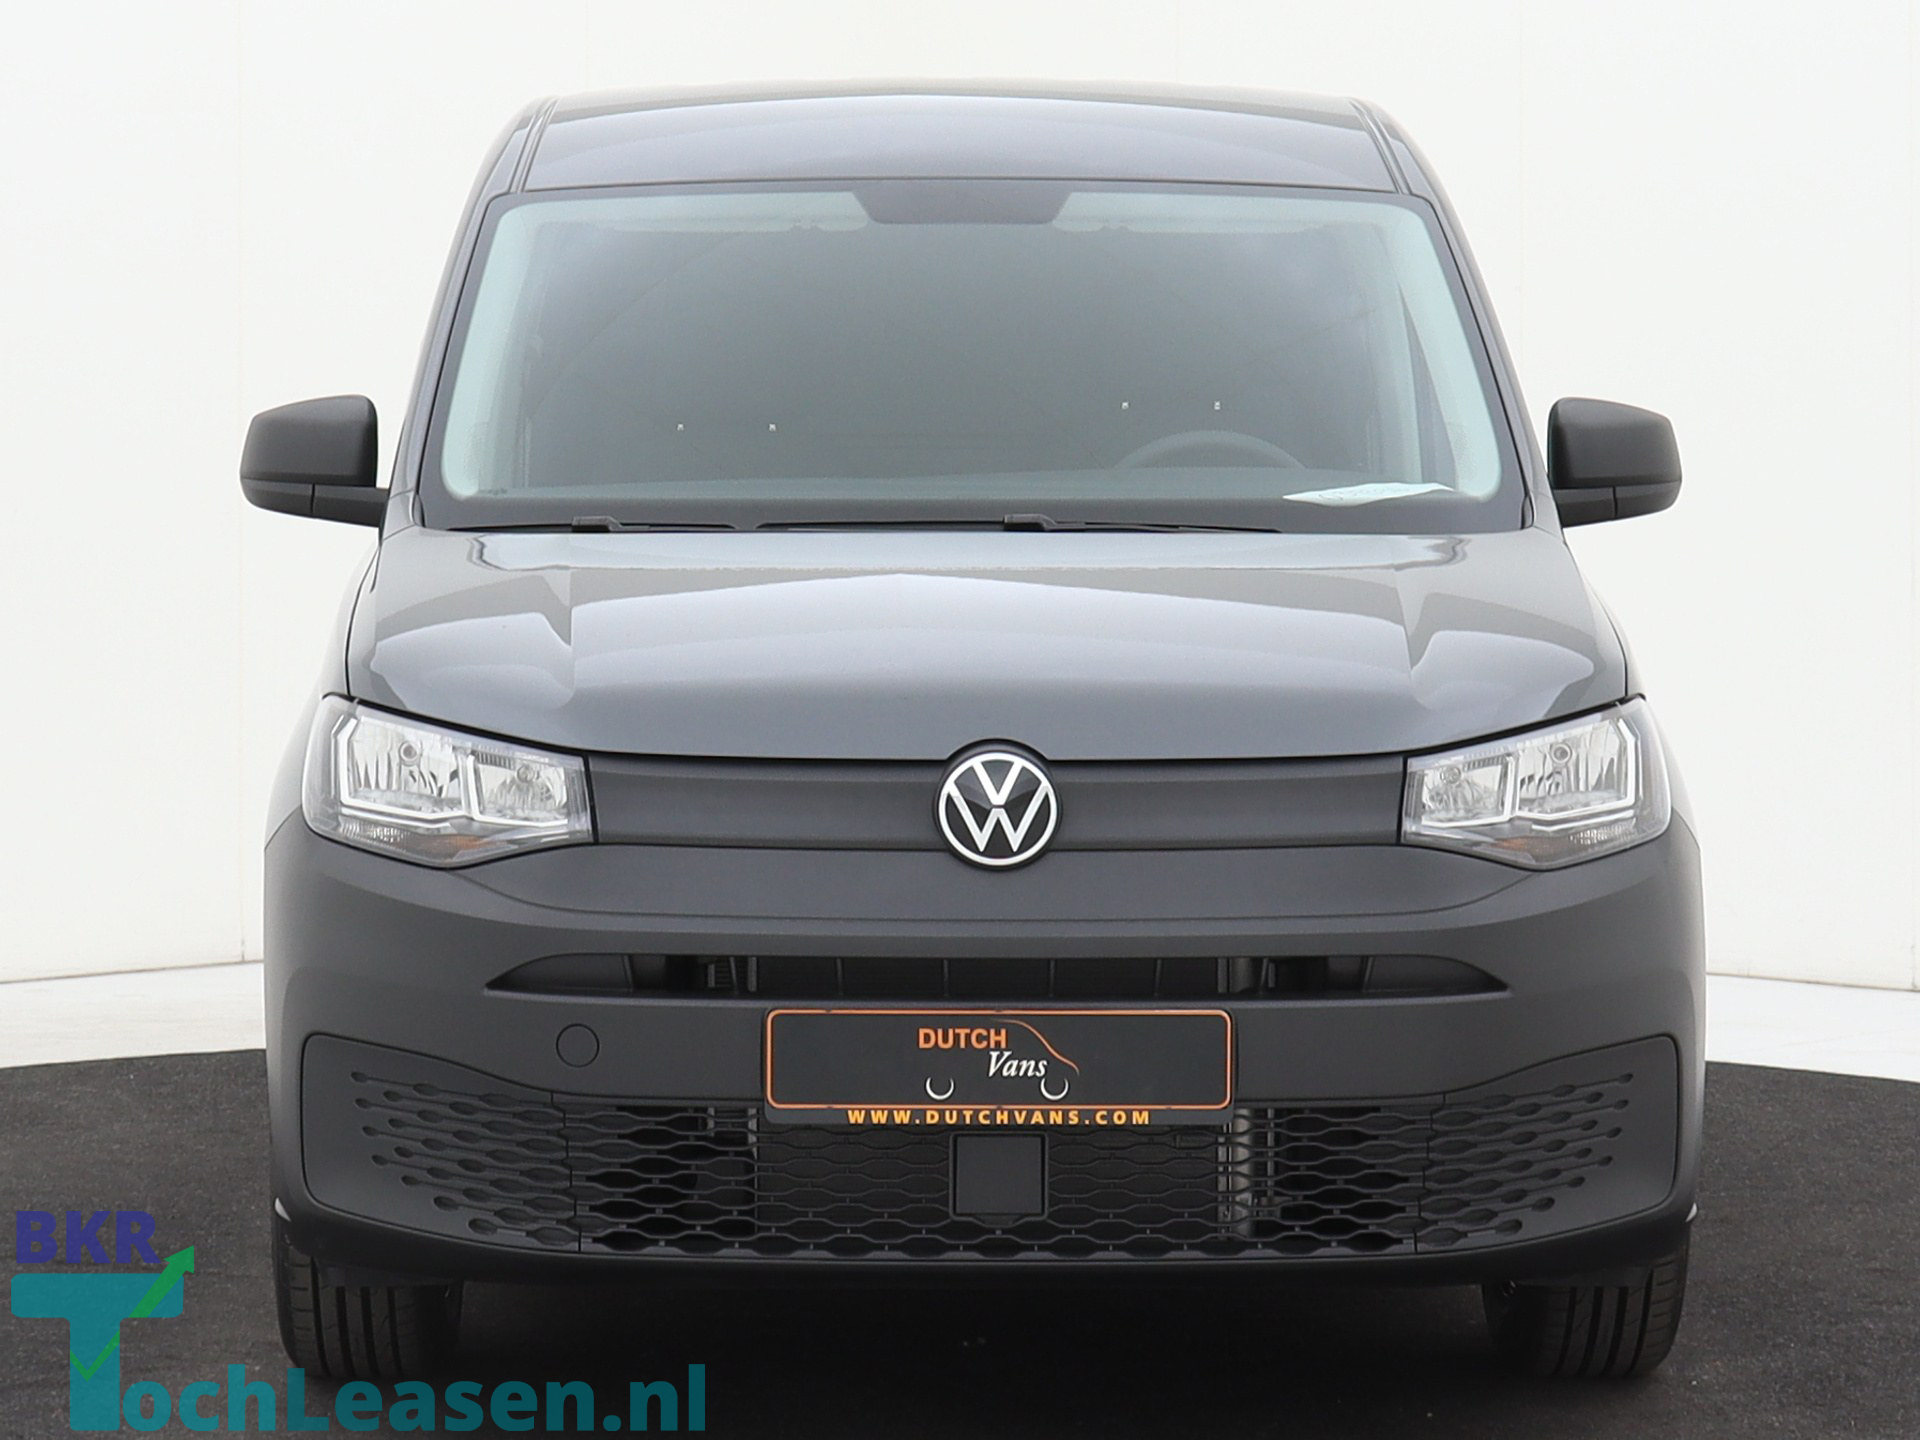 BKR toch leasen - Volkswagen Caddy - Grijs 5